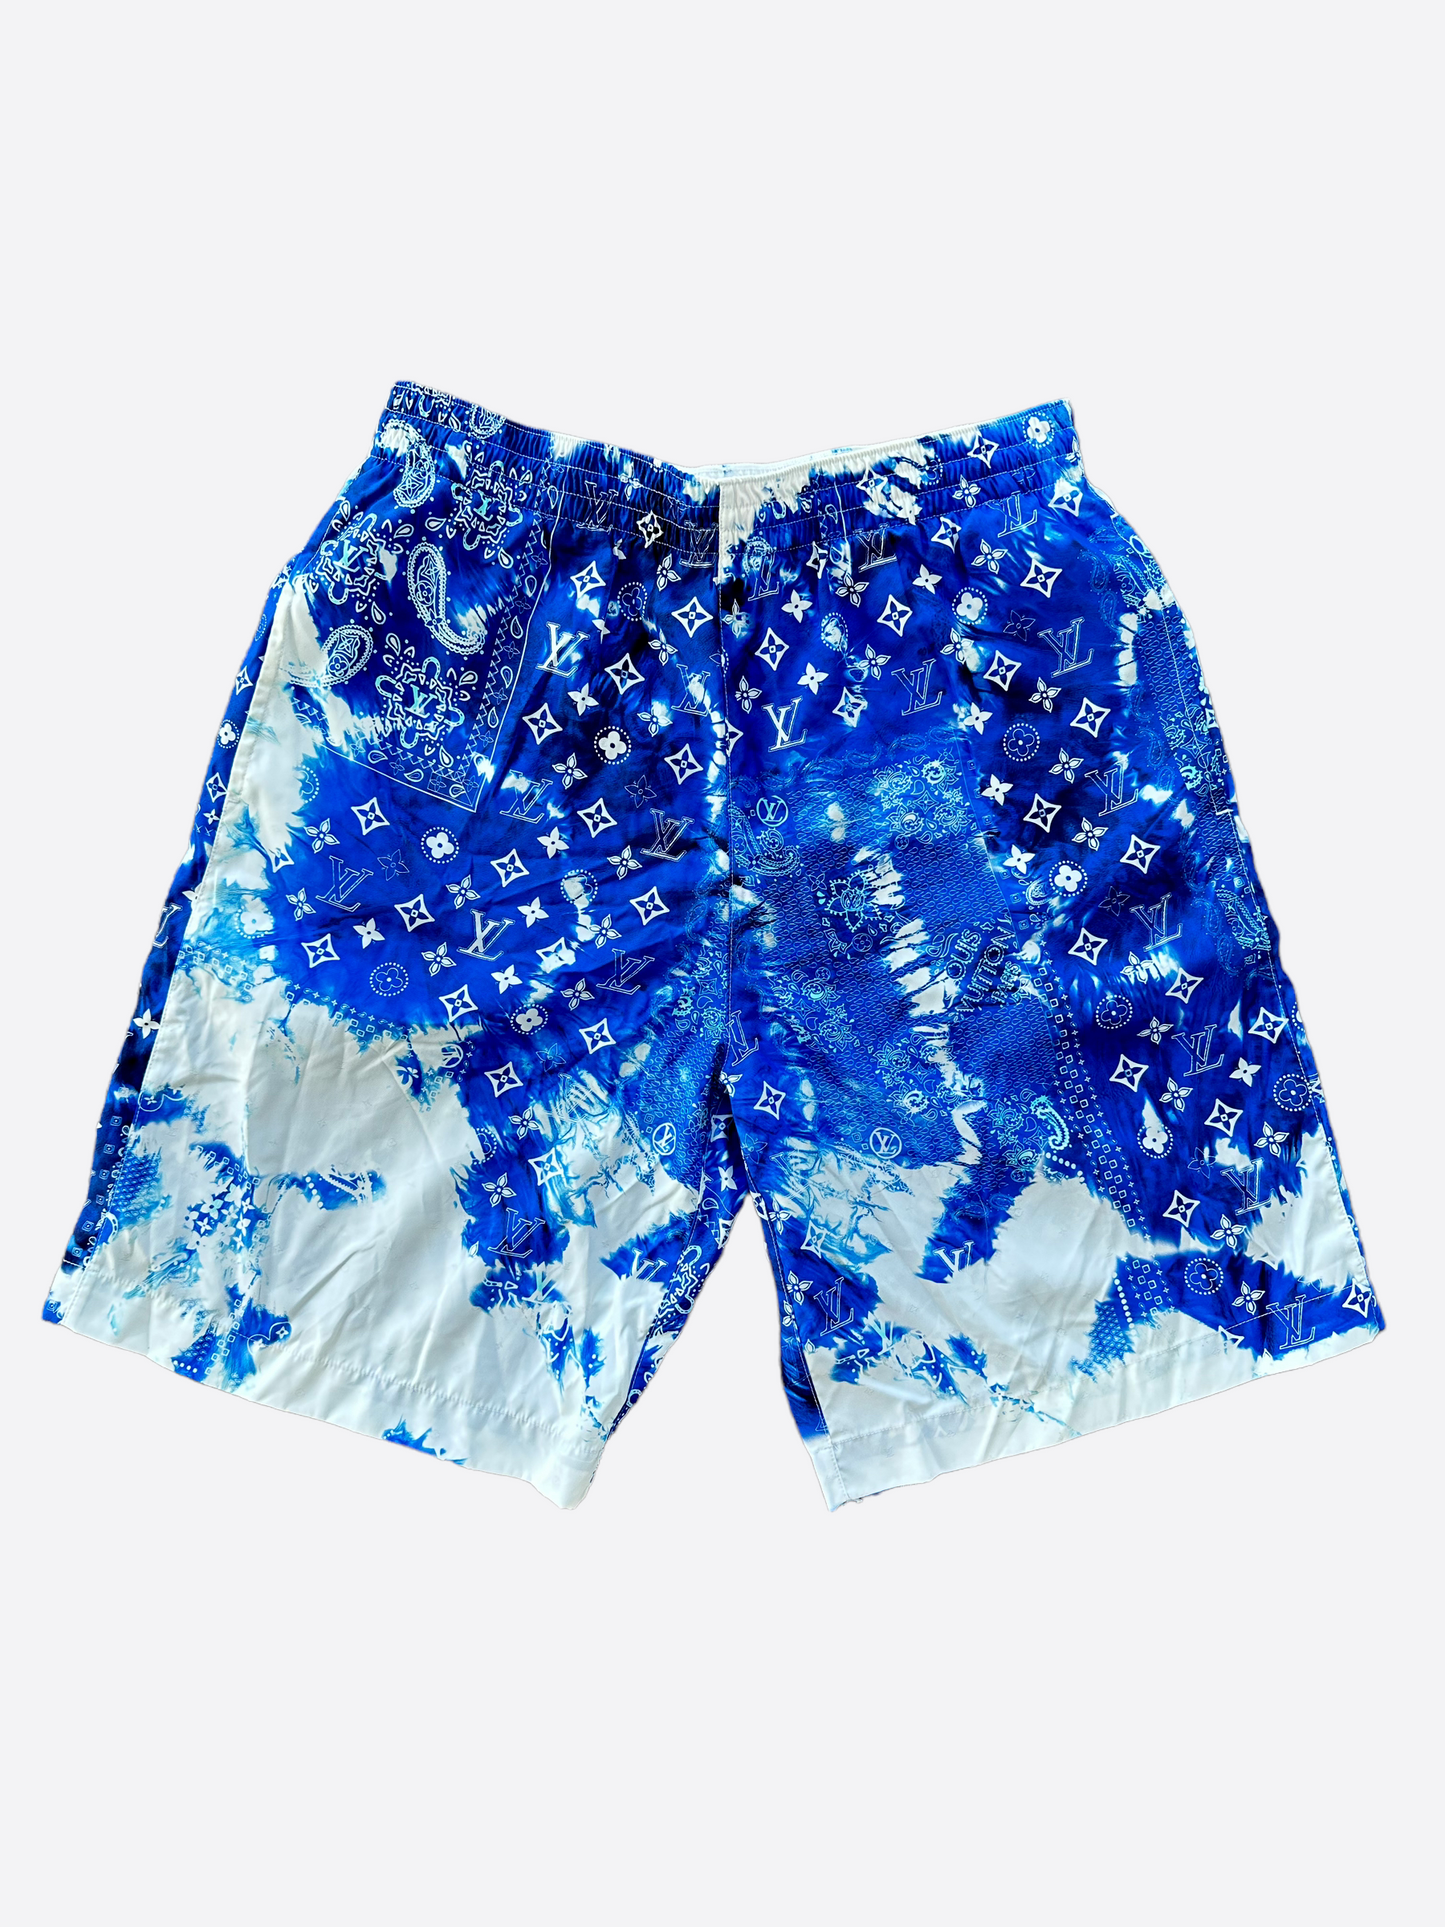 Louis Vuitton Blue Monogram Swim Shorts